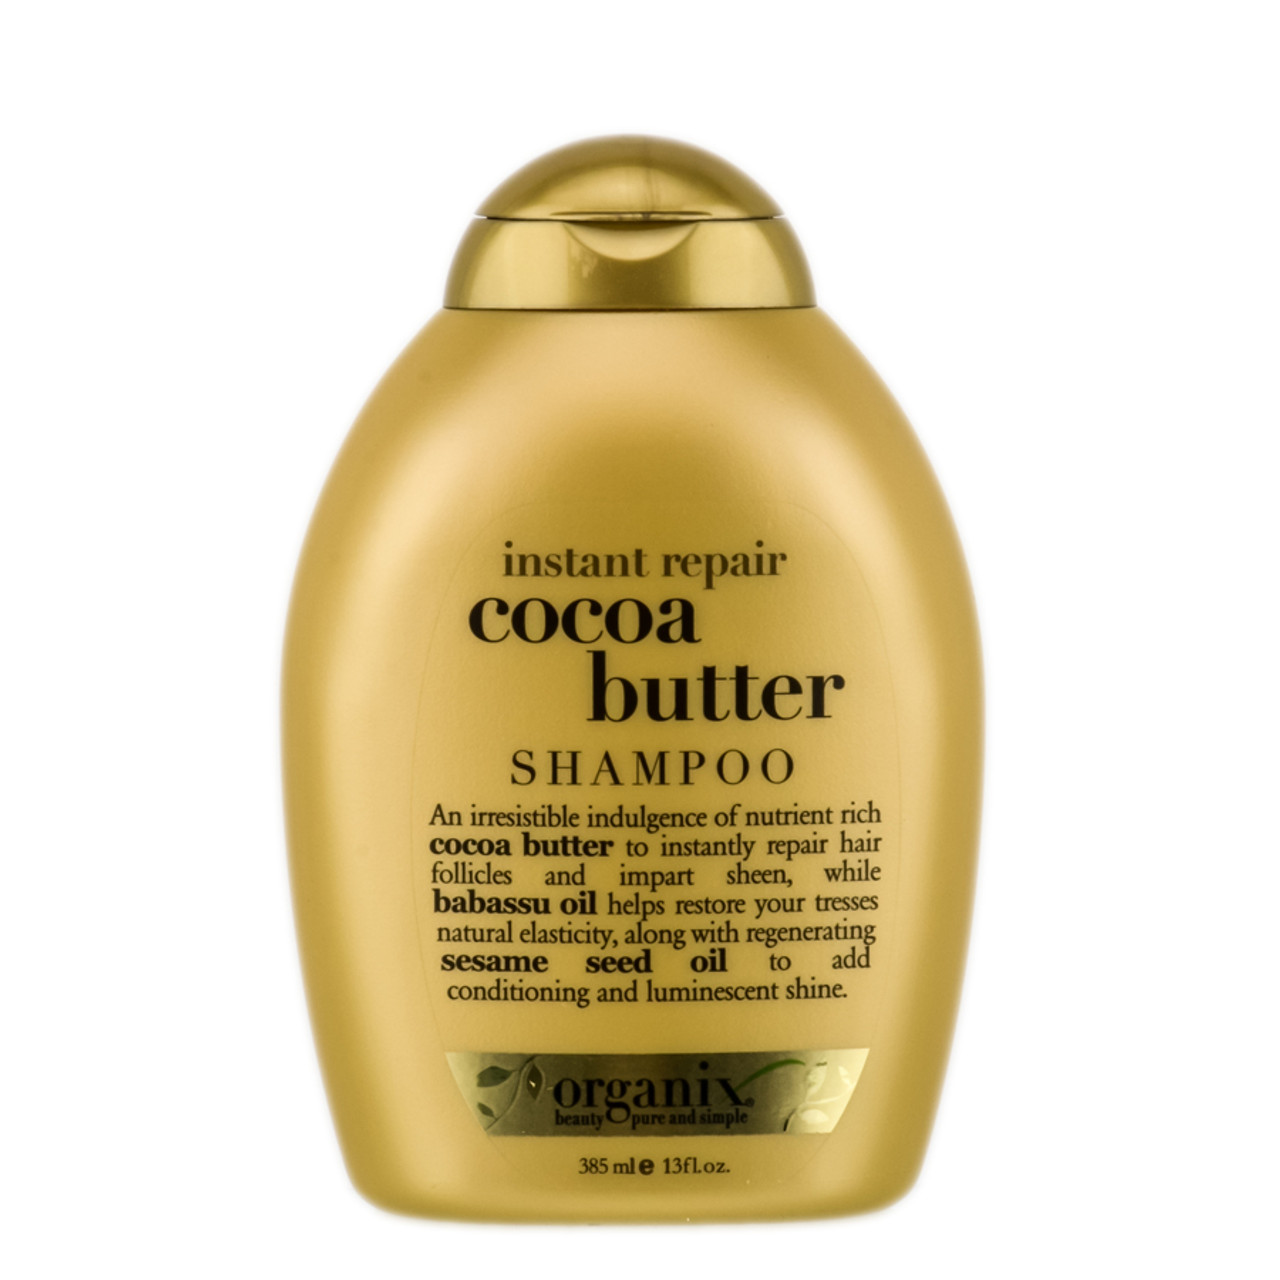 Organix Instant Repair Cocoa Butter Shampoo - SleekShop.com (formerly ...